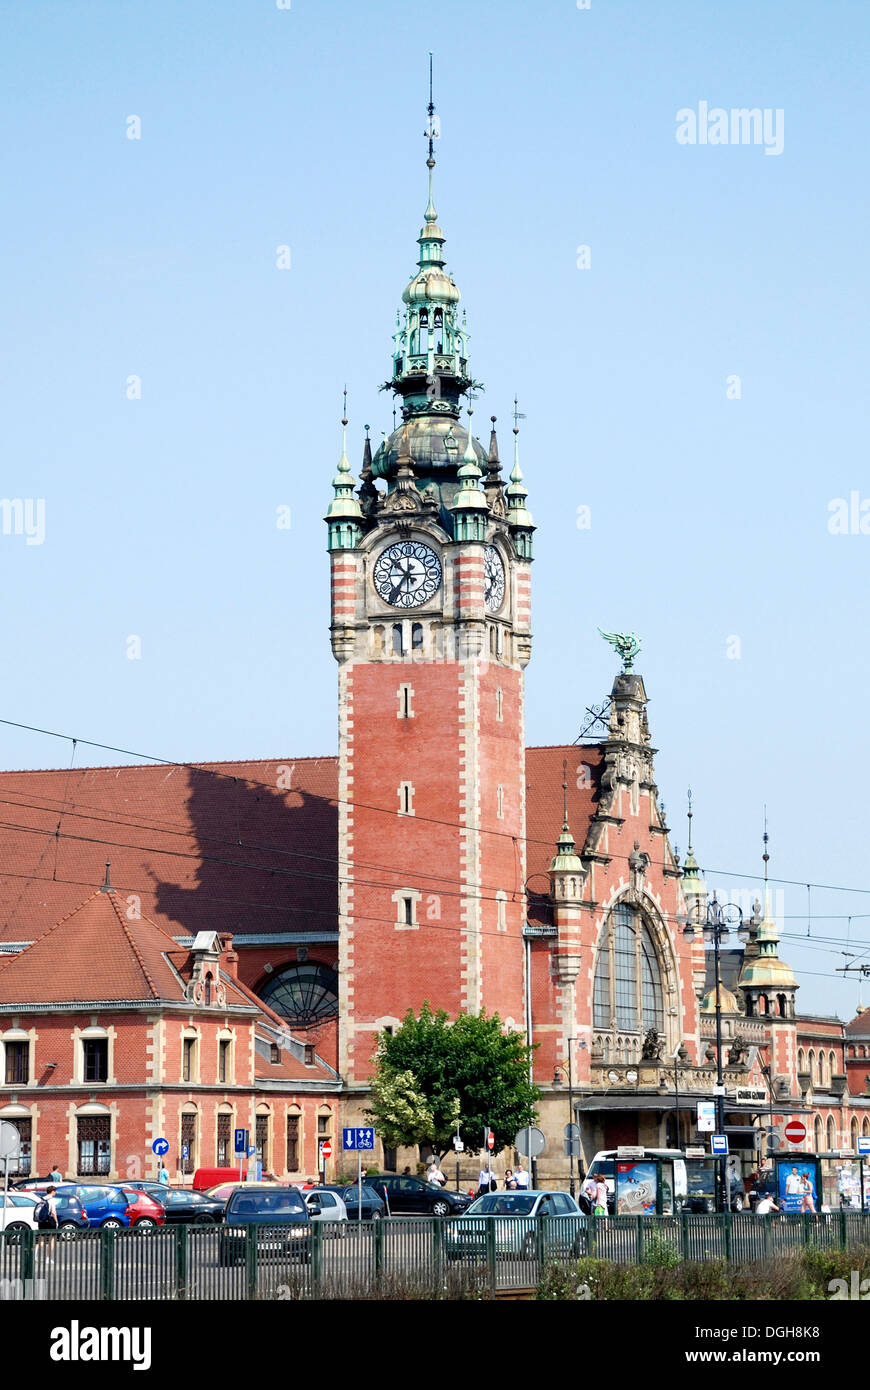 La gare principale de Gdansk - Gdansk Glowny. Banque D'Images